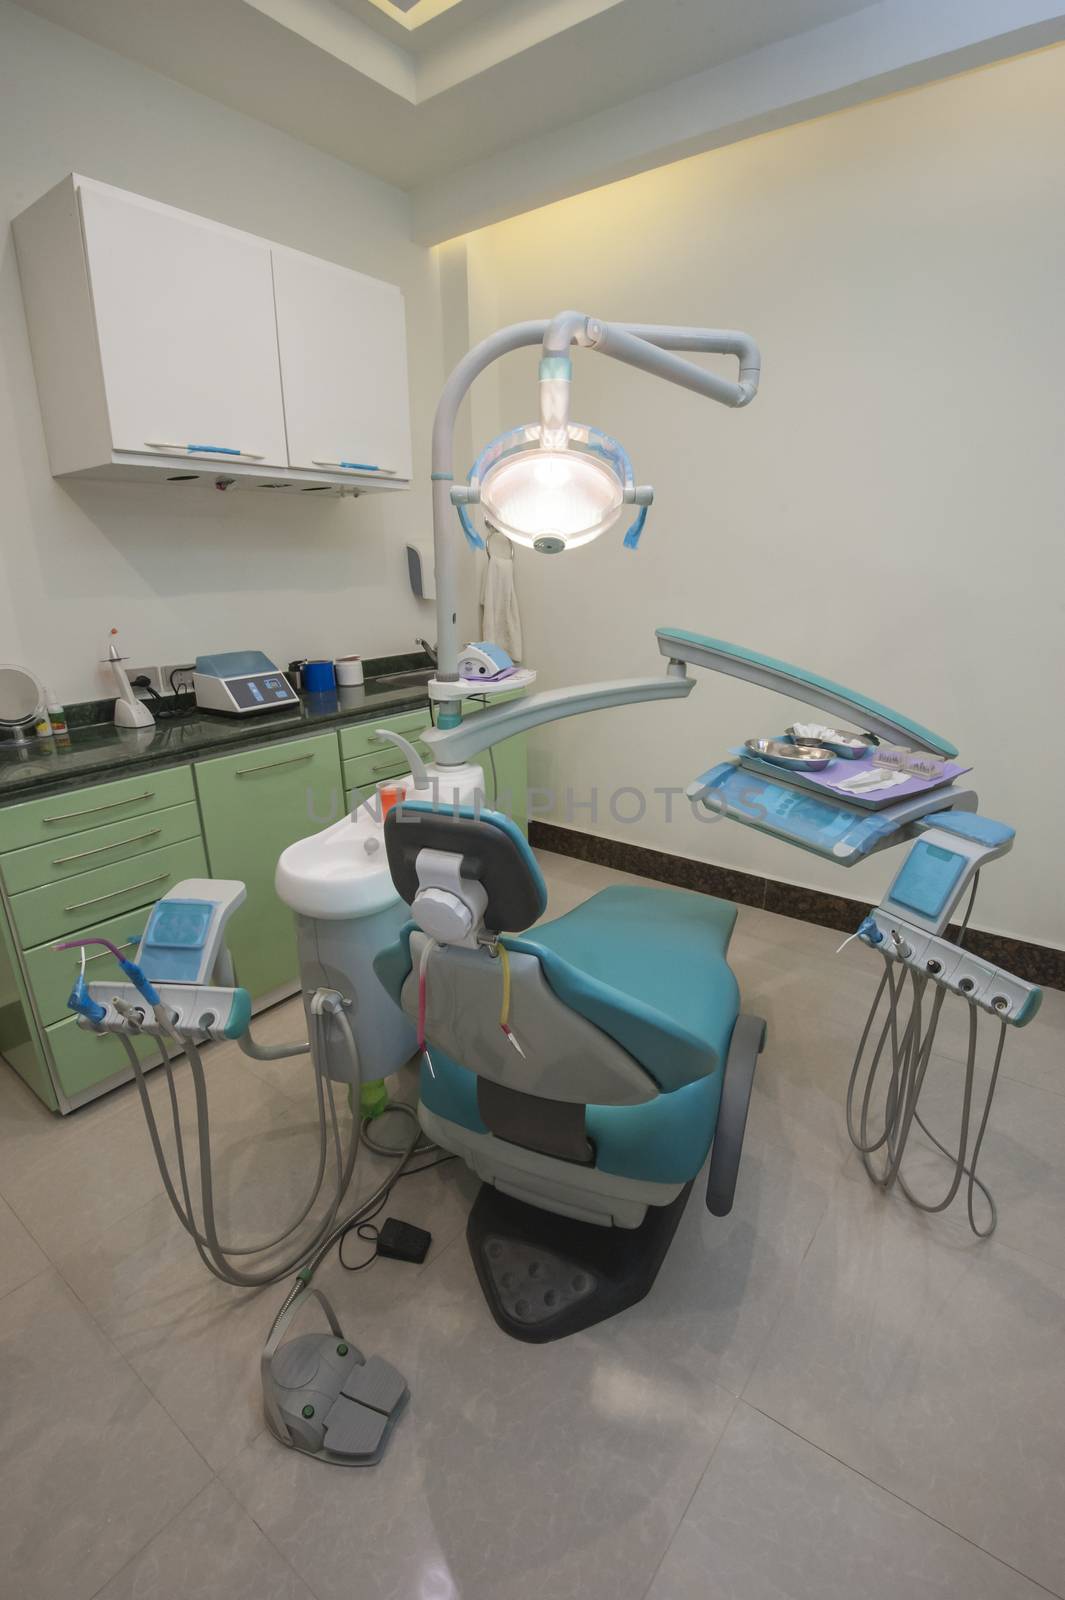 Equipment in a dentist surgery by paulvinten